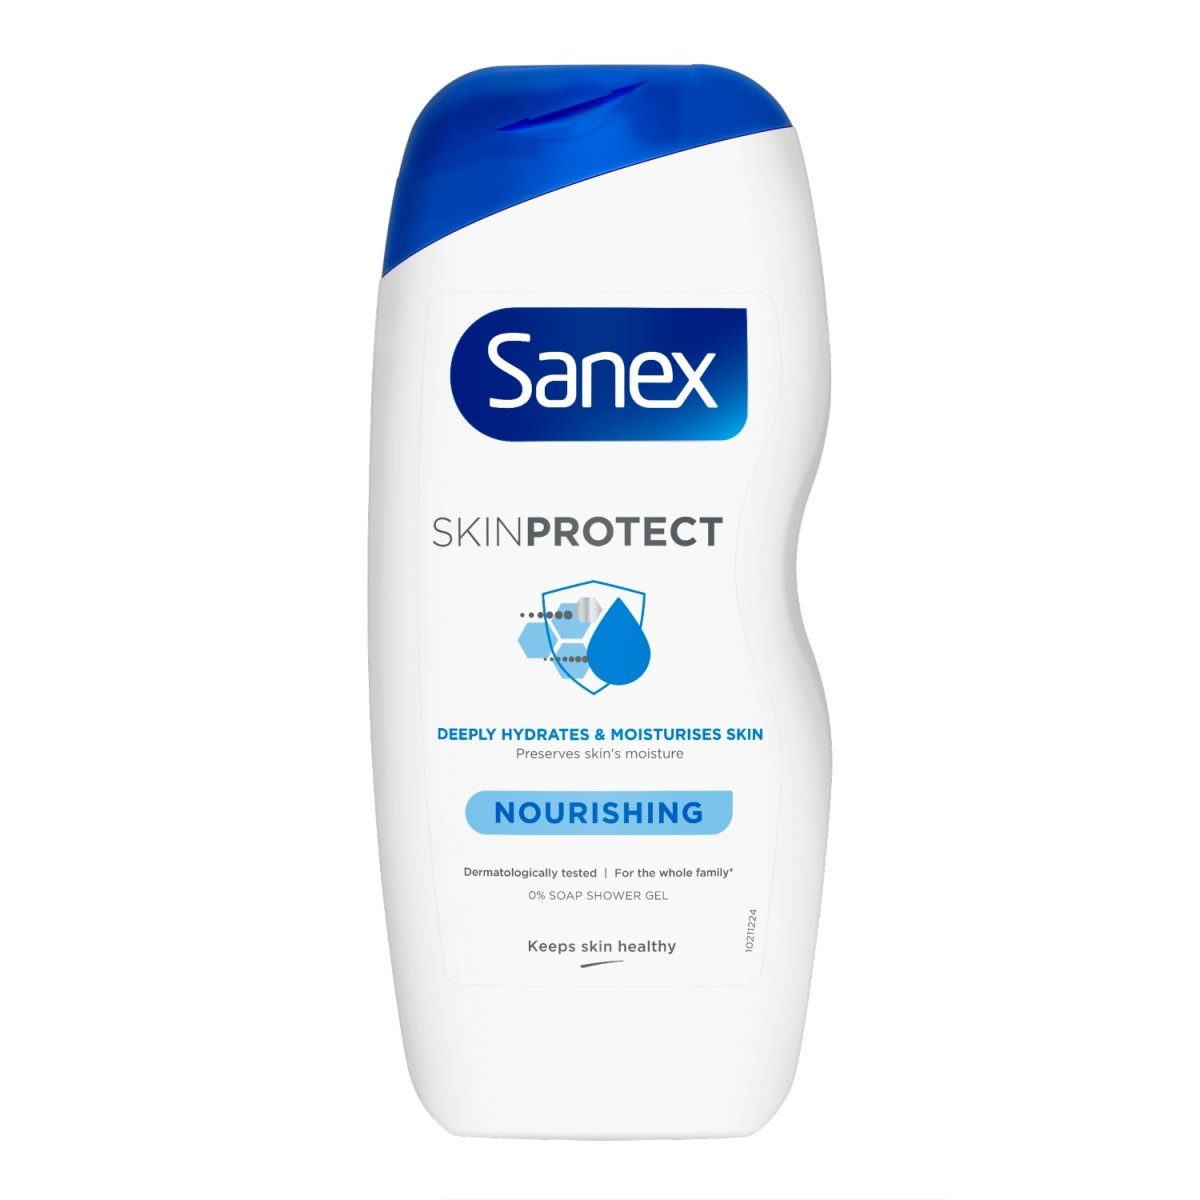 Sanex ShowerGel Skin Protect Nourishing - Intamarque 8718951540149